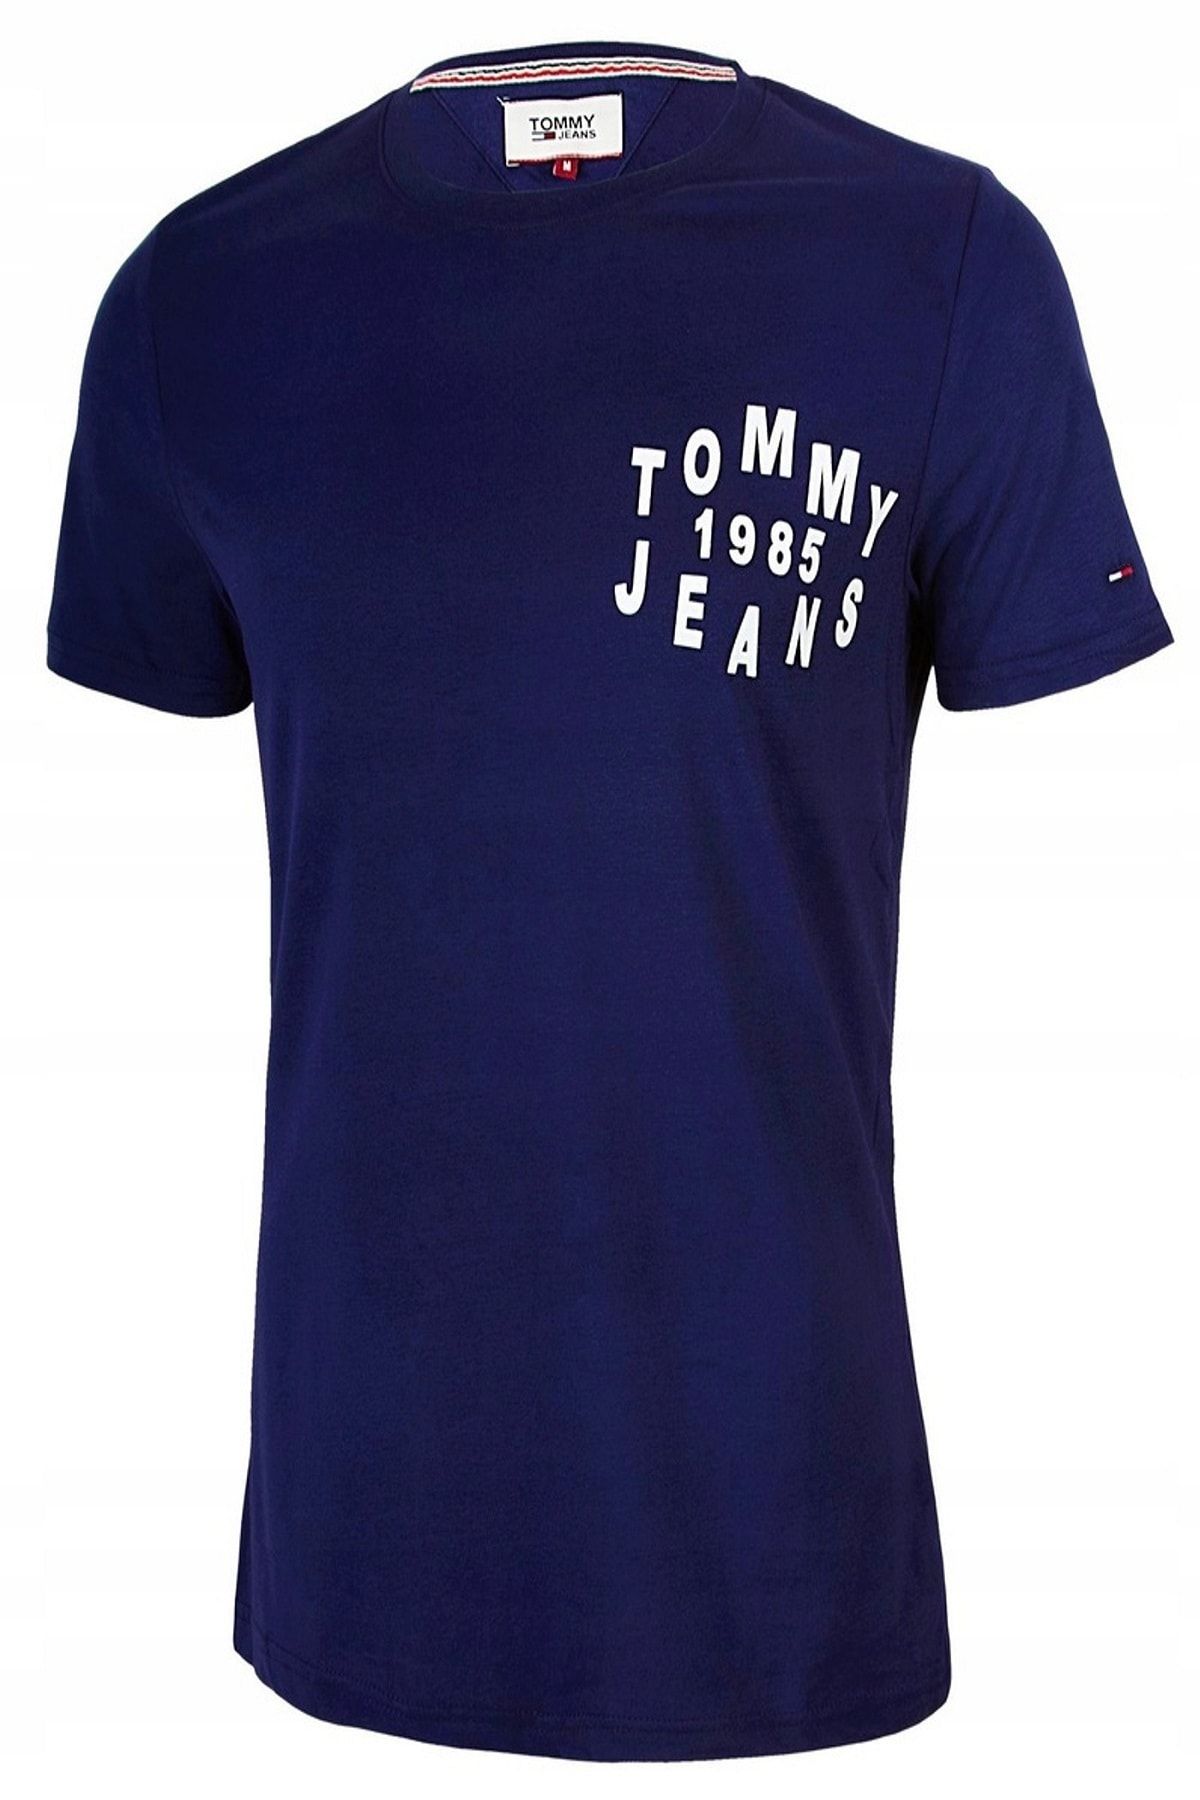 Tommy Hilfiger T-shirt Nyc Since 1985 Navy Blue Dm0dm03724